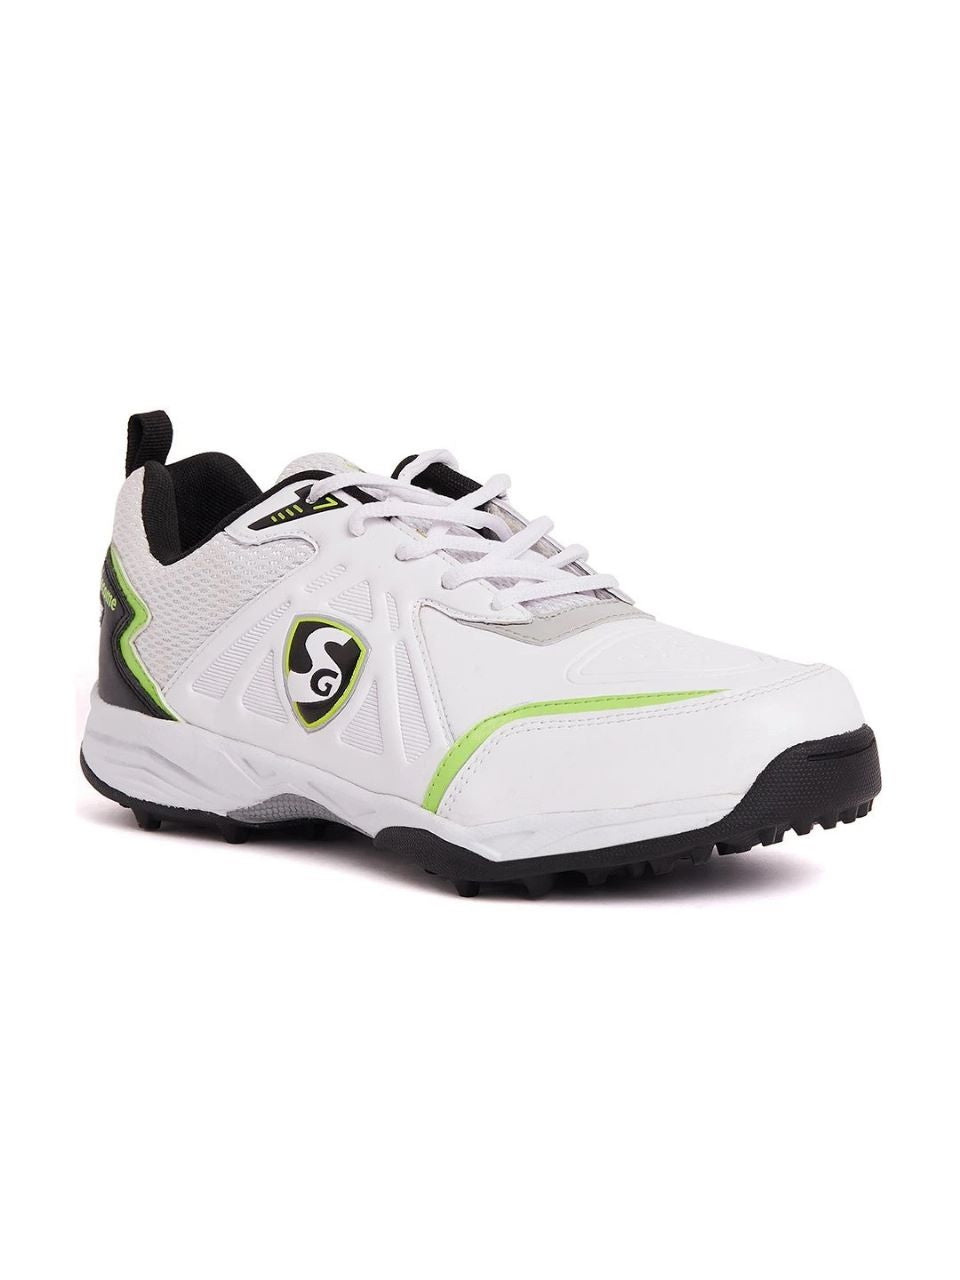 SG Scorer 5.0 Cricket Shoe - White/Black/Lime